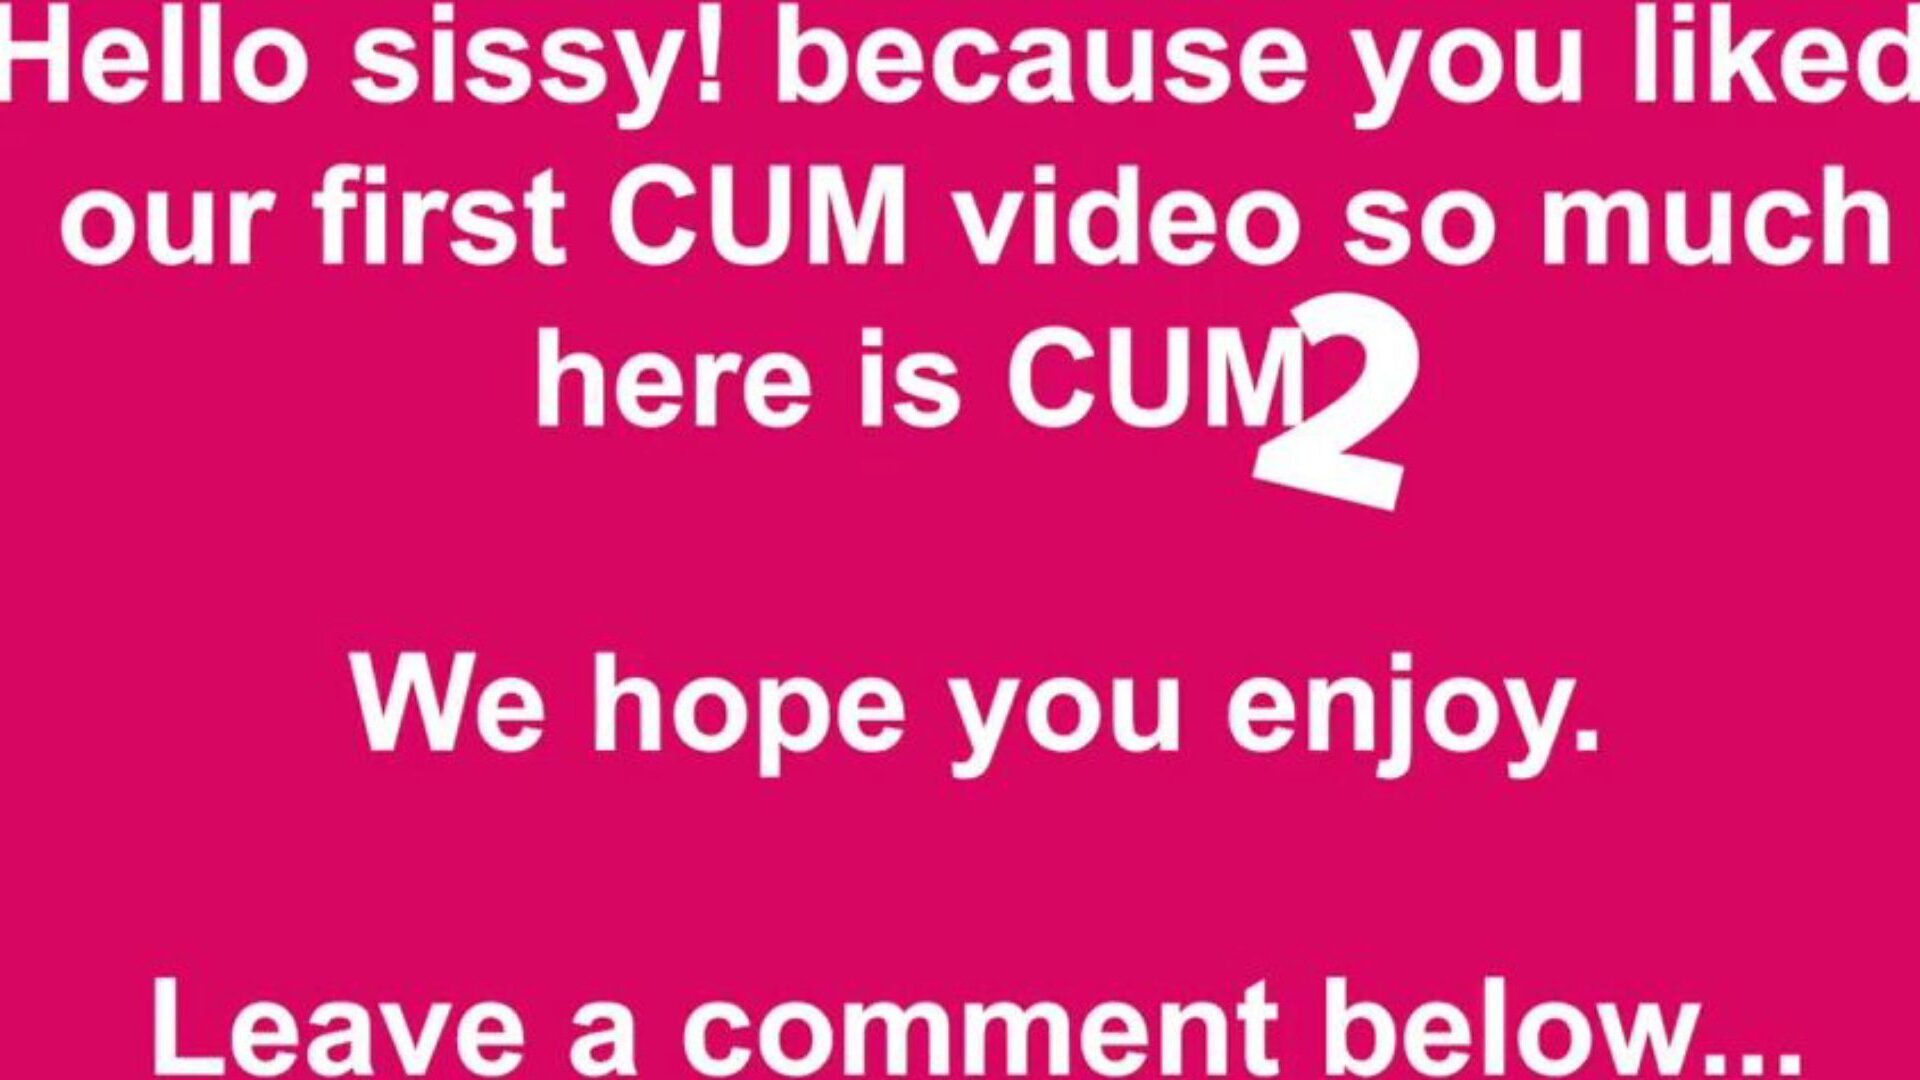 cum two free cum & cumming tube video porno 49 - xhamster ceas cum two tube fuck-a-thon video gratuit pe xhamster, cu colecția imperioasă de cum cum cum tube & tube 2 episoade de filme porno hd